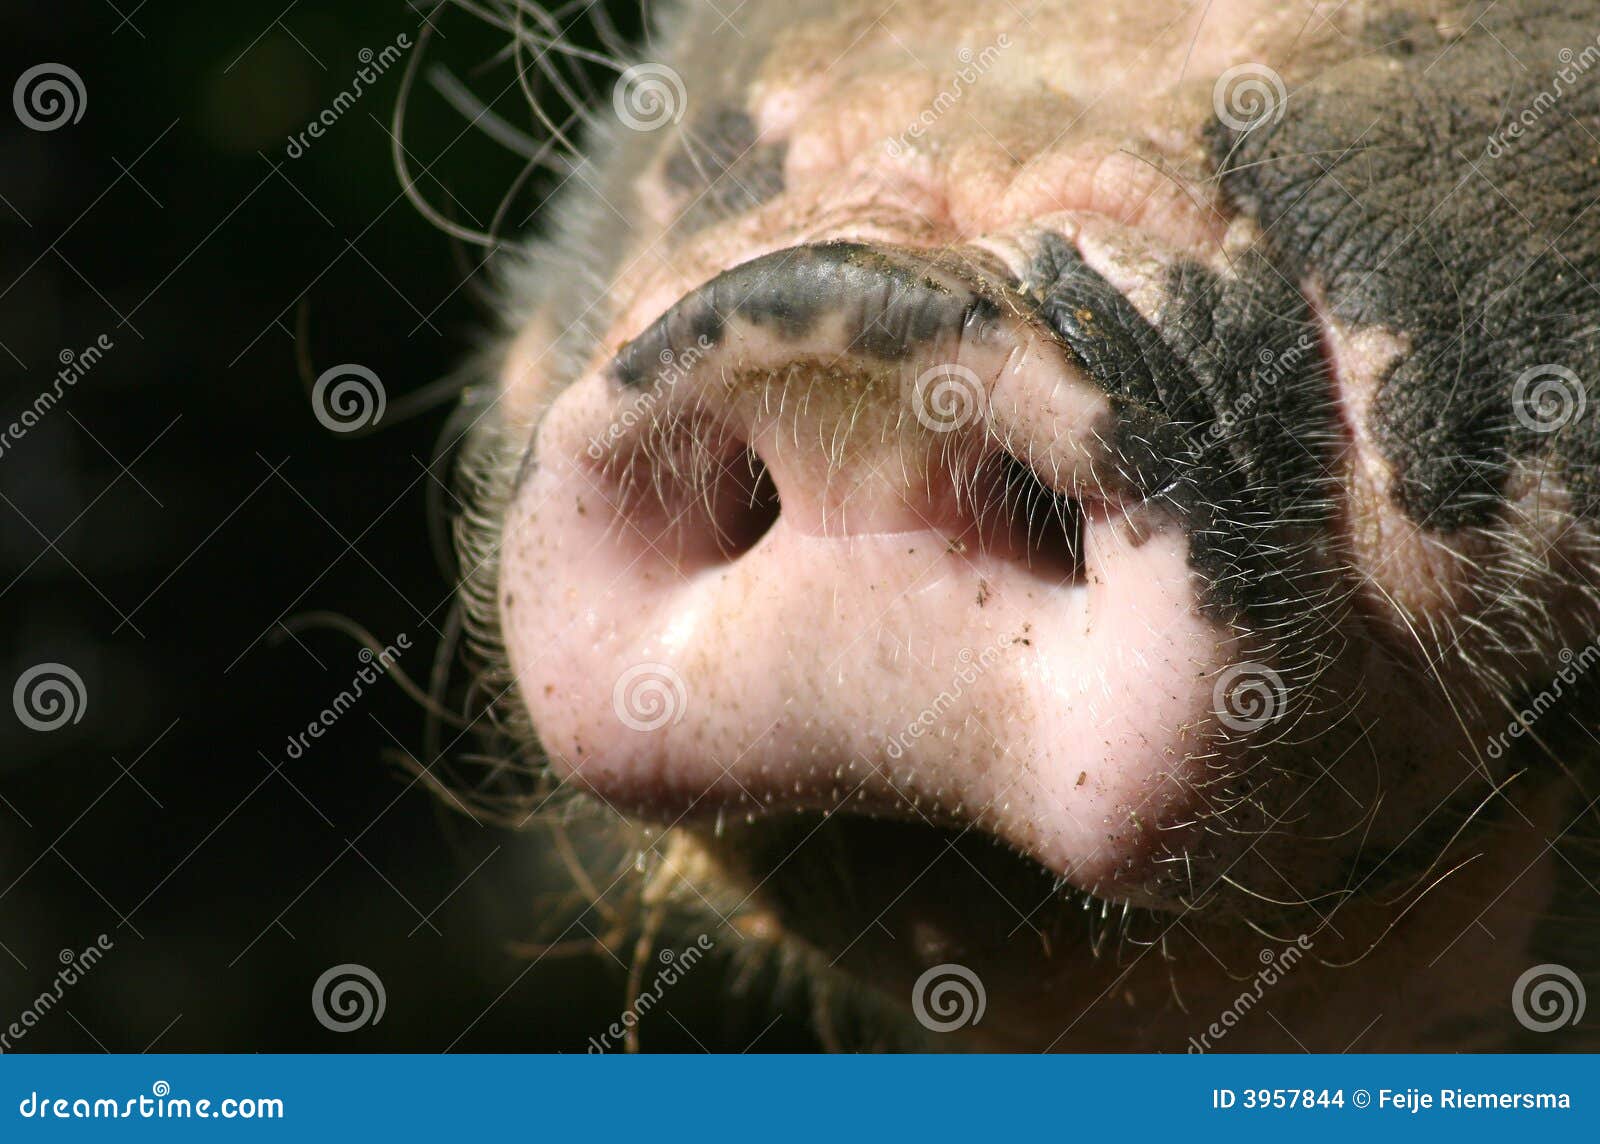 snout of a pig